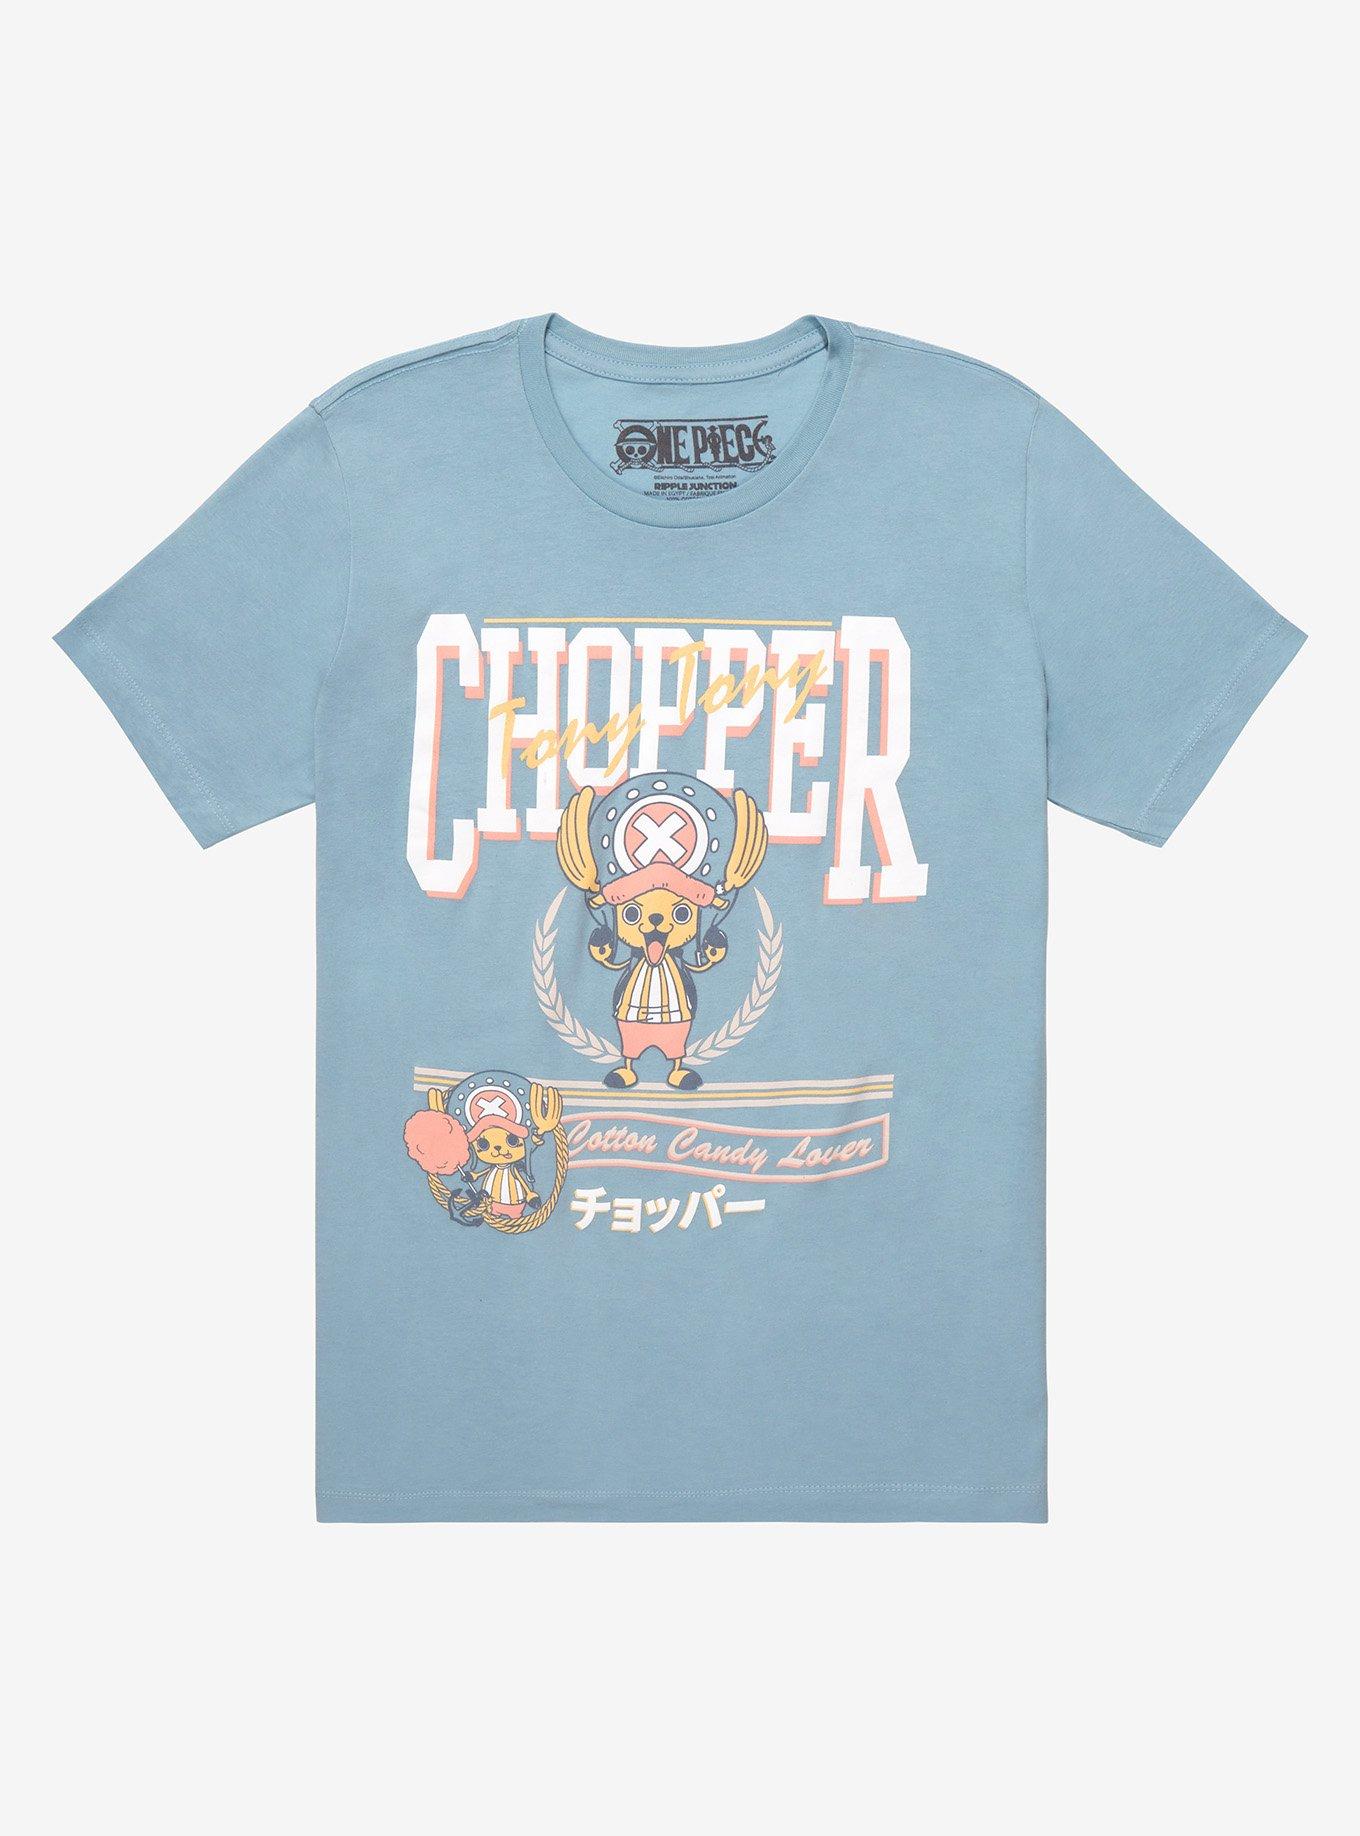 Zou outfit Chopper! : r/OnePiece